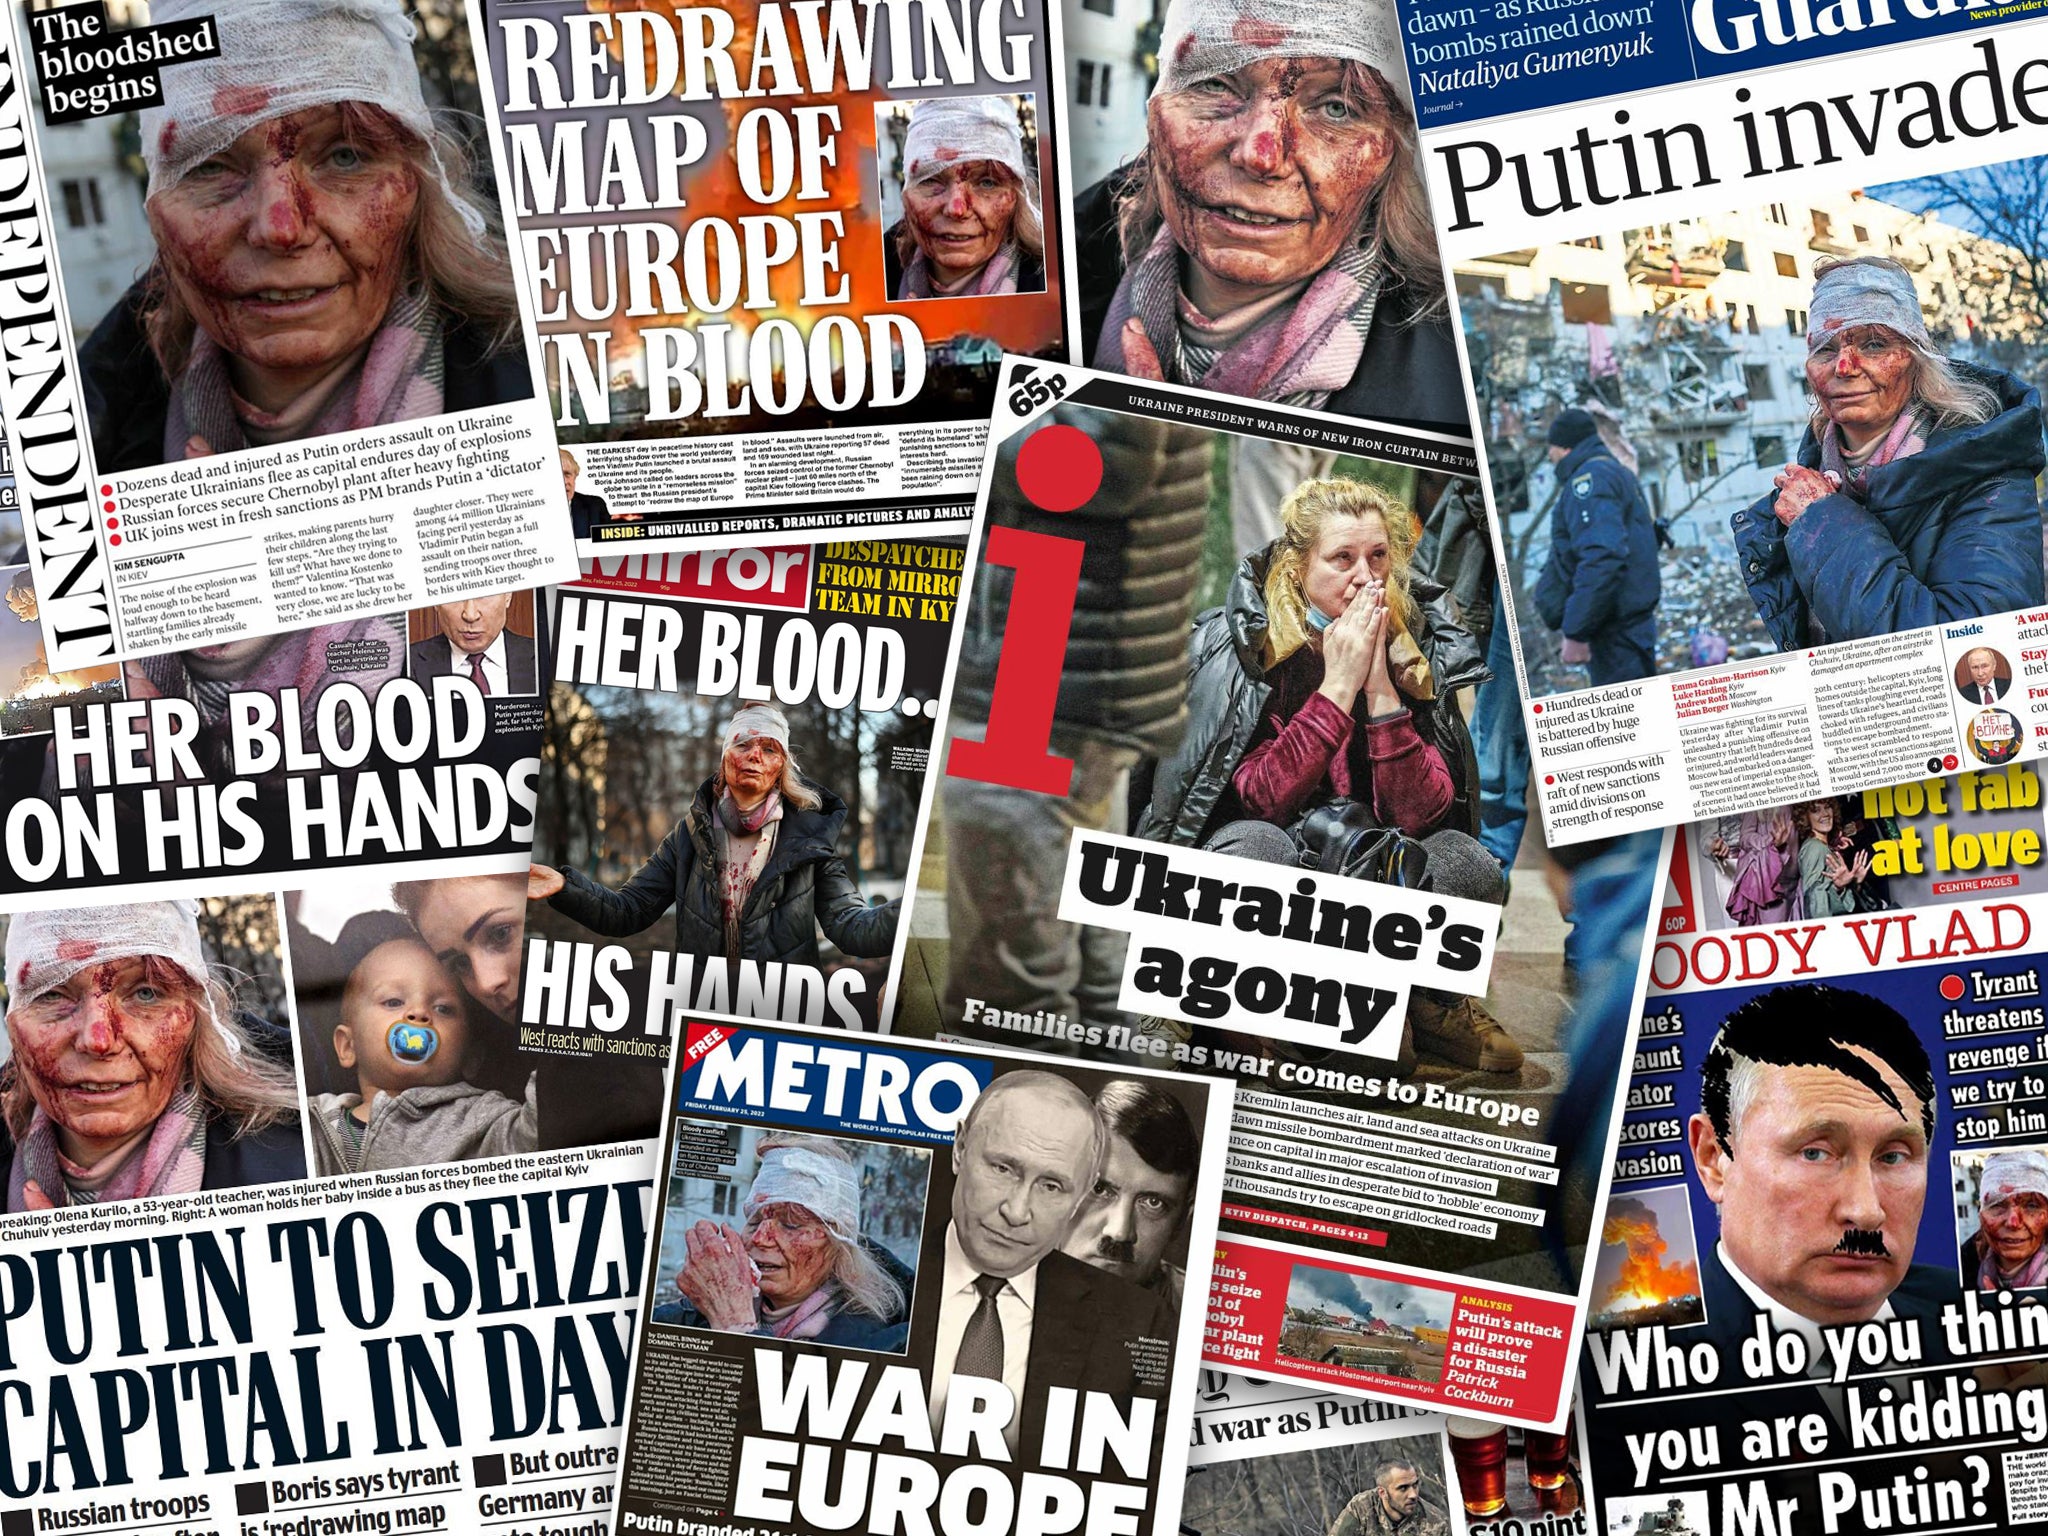 President Putin’s decision to invade Ukraine dominated the headlines